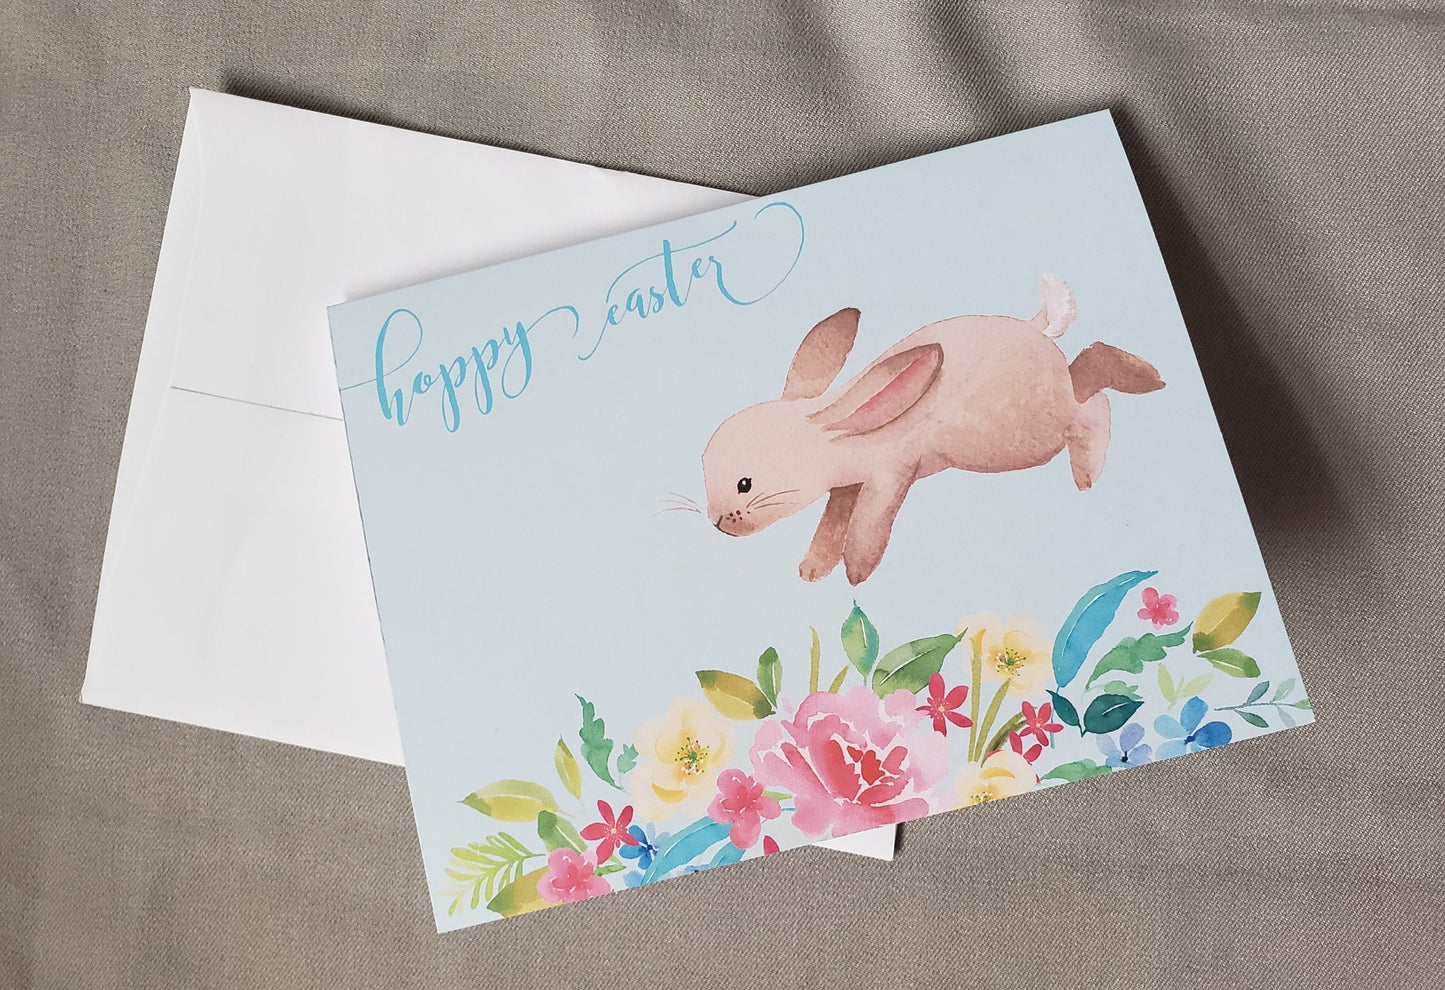 Easter Bunny Greeting Card "Hoppy Easter"